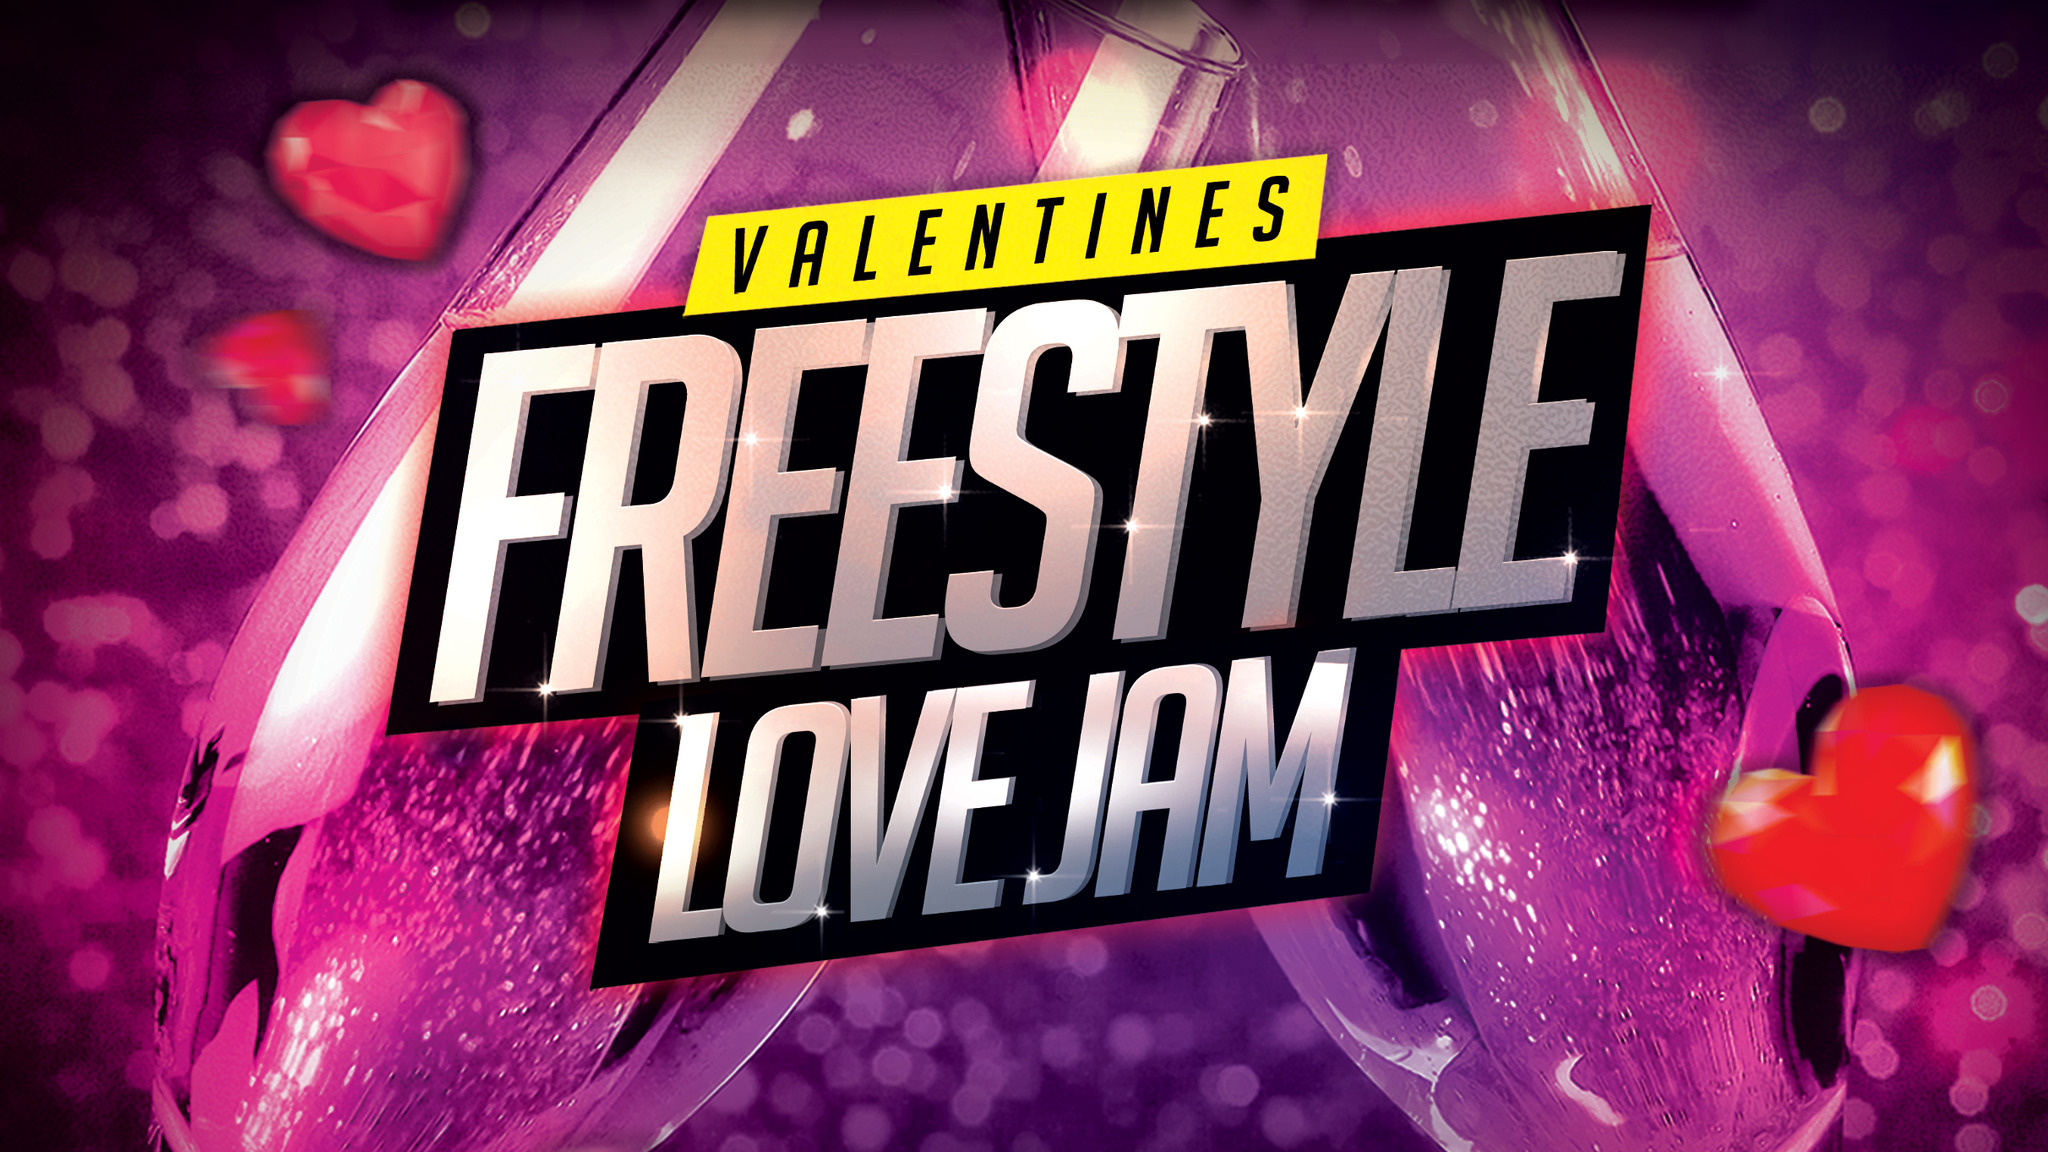 Valentines Freestyle Love Jam Tickets, 2023 Concert Tour Dates